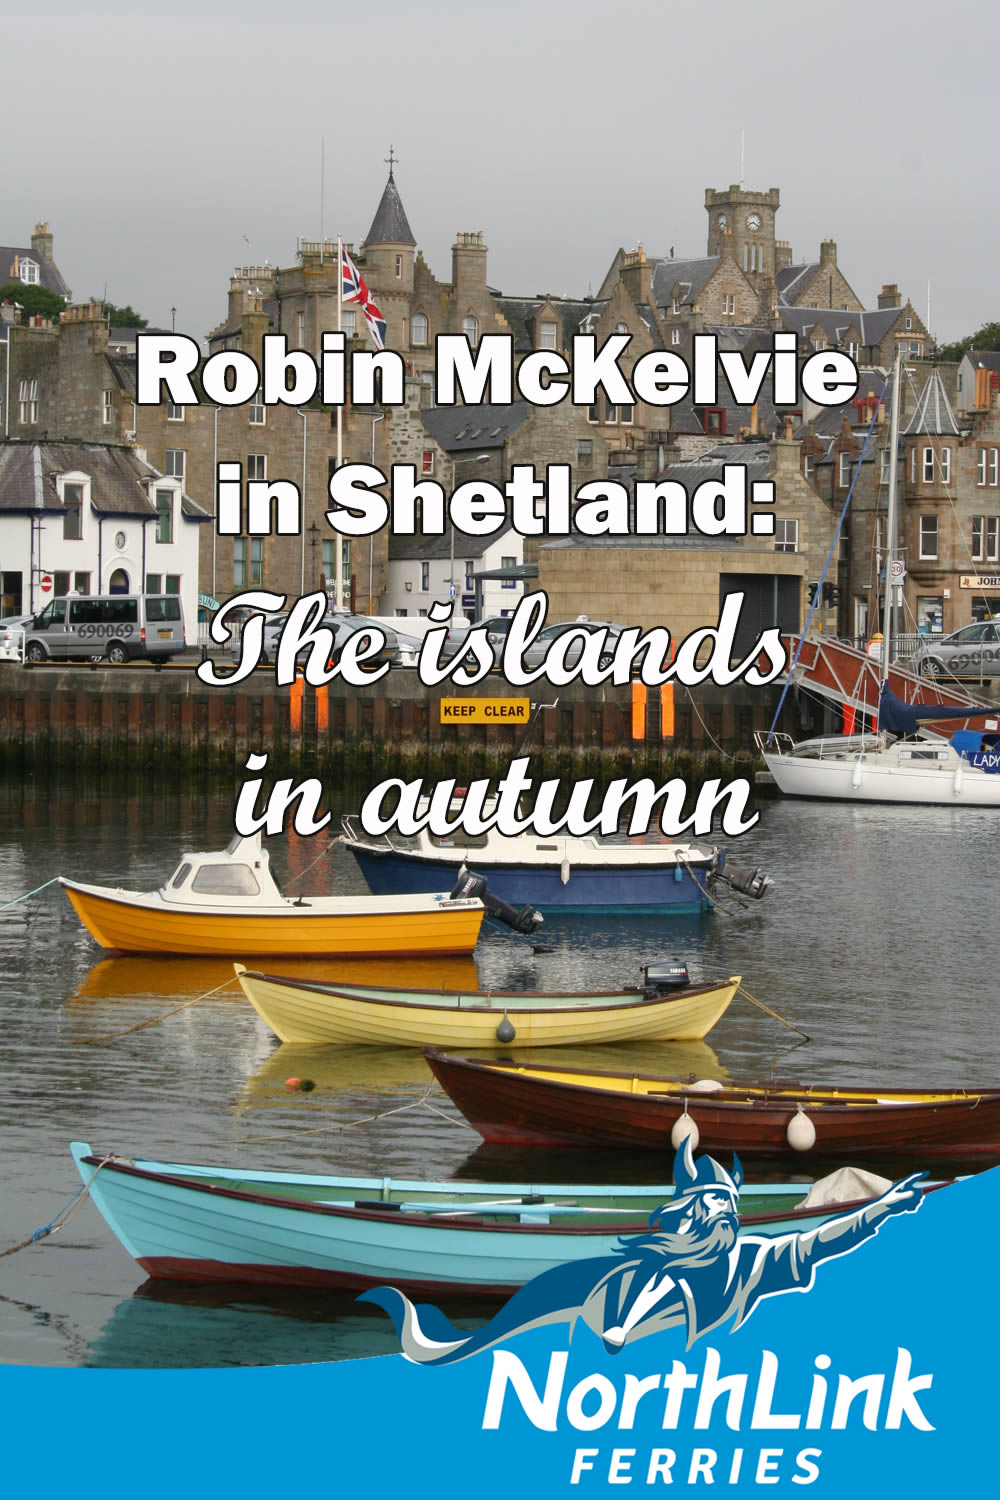 Robin McKelvie in Shetland: The islands in autumn